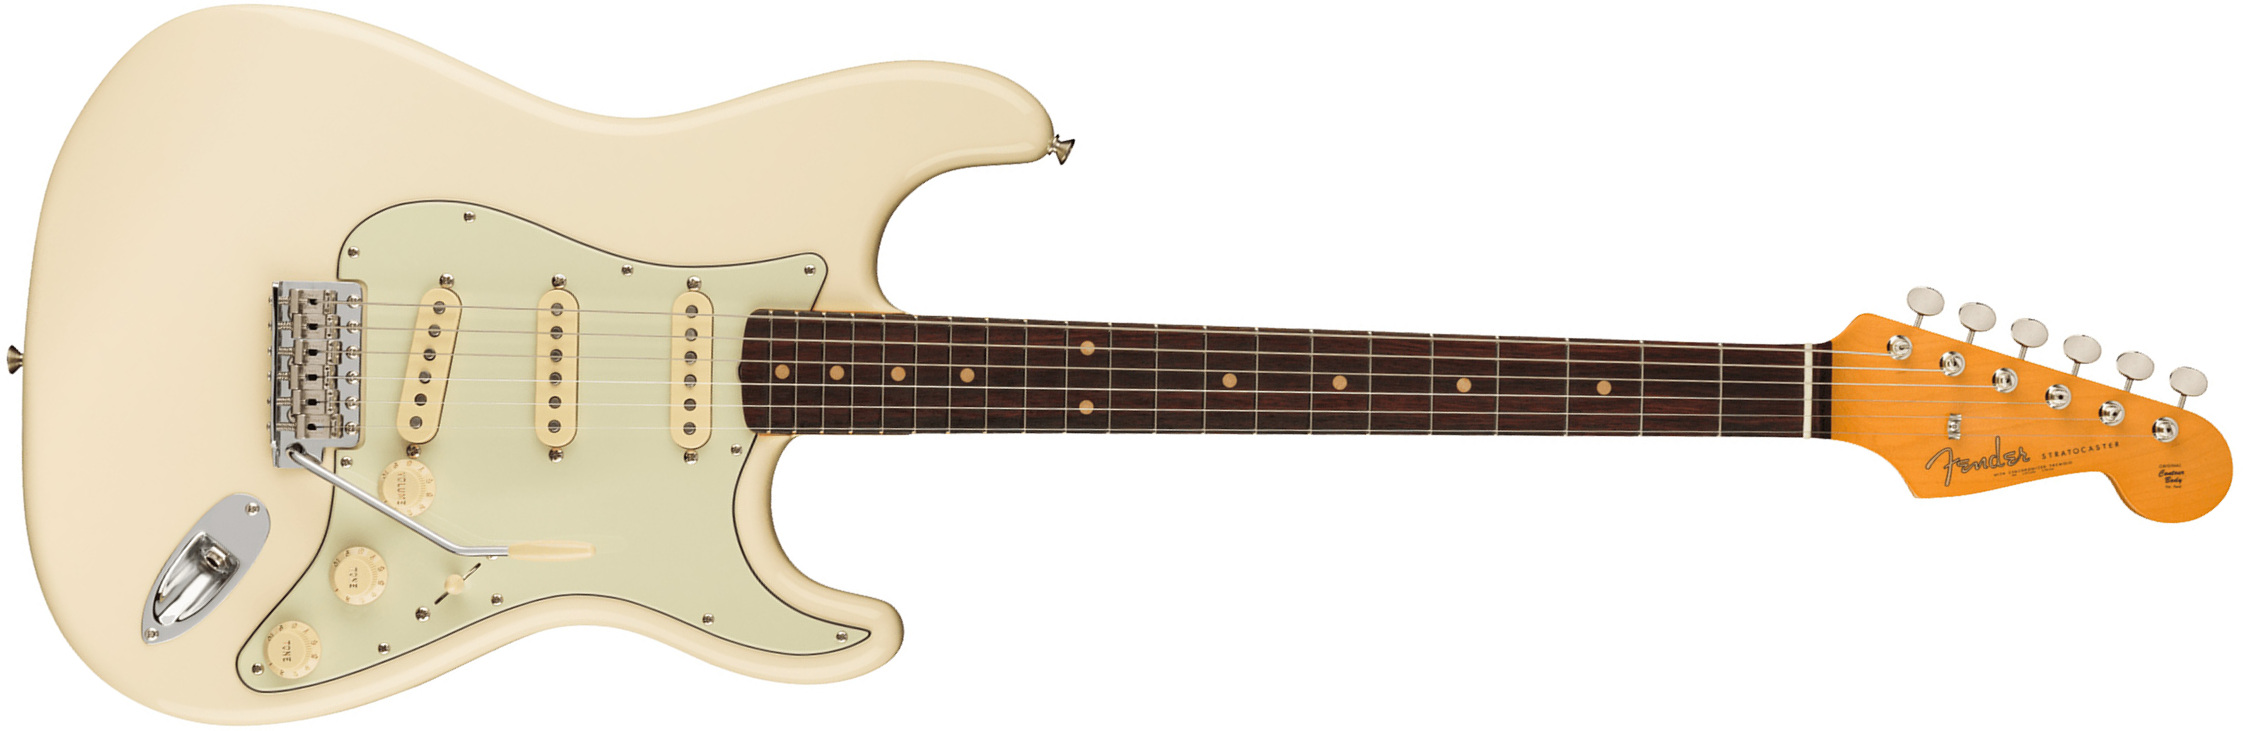 Fender Strat 1961 American Vintage Ii Usa 3s Trem Rw - Olympic White - Guitare Électrique Forme Str - Main picture